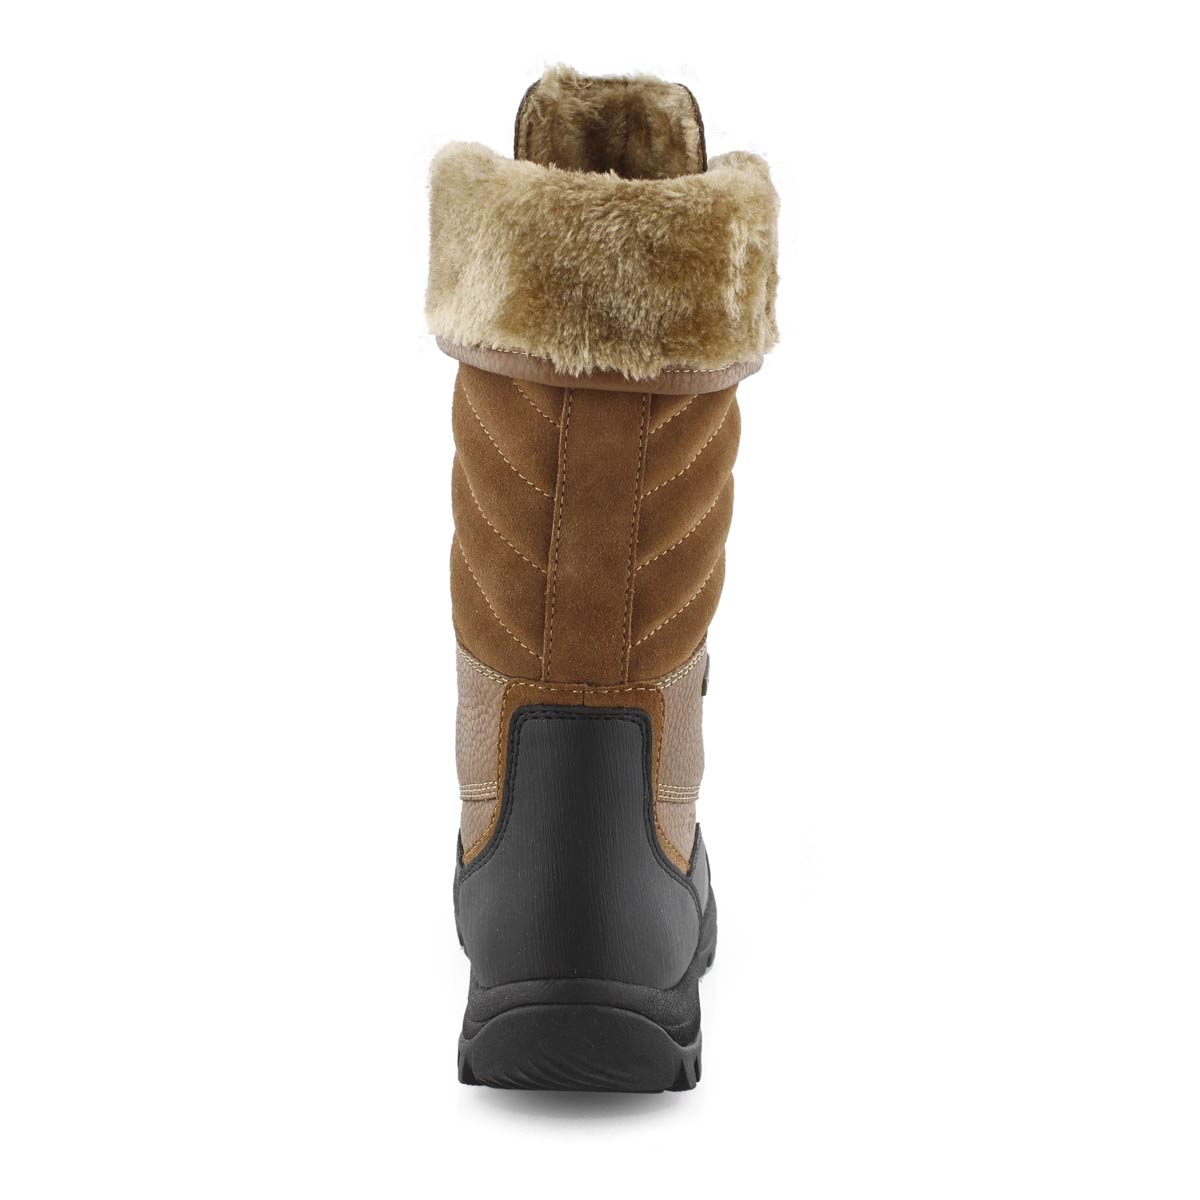 softmoc ladies winter boots